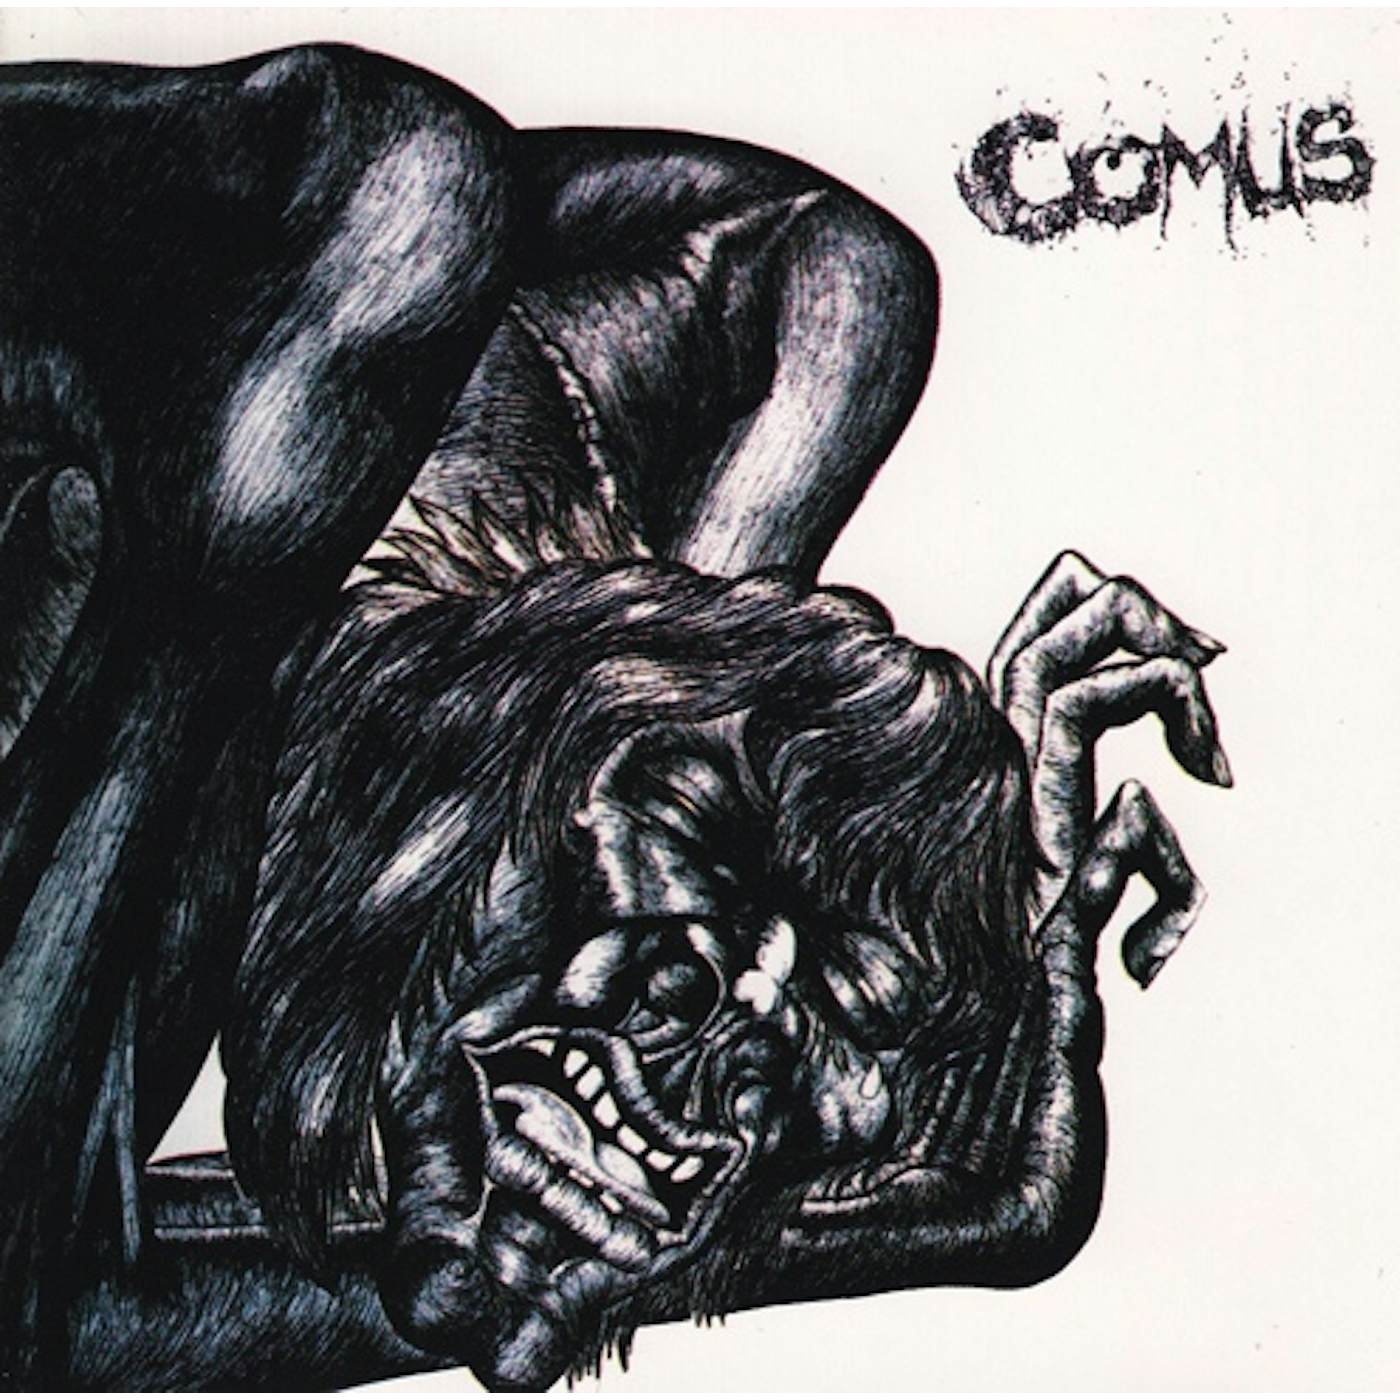 Comus First Utterance Vinyl Record